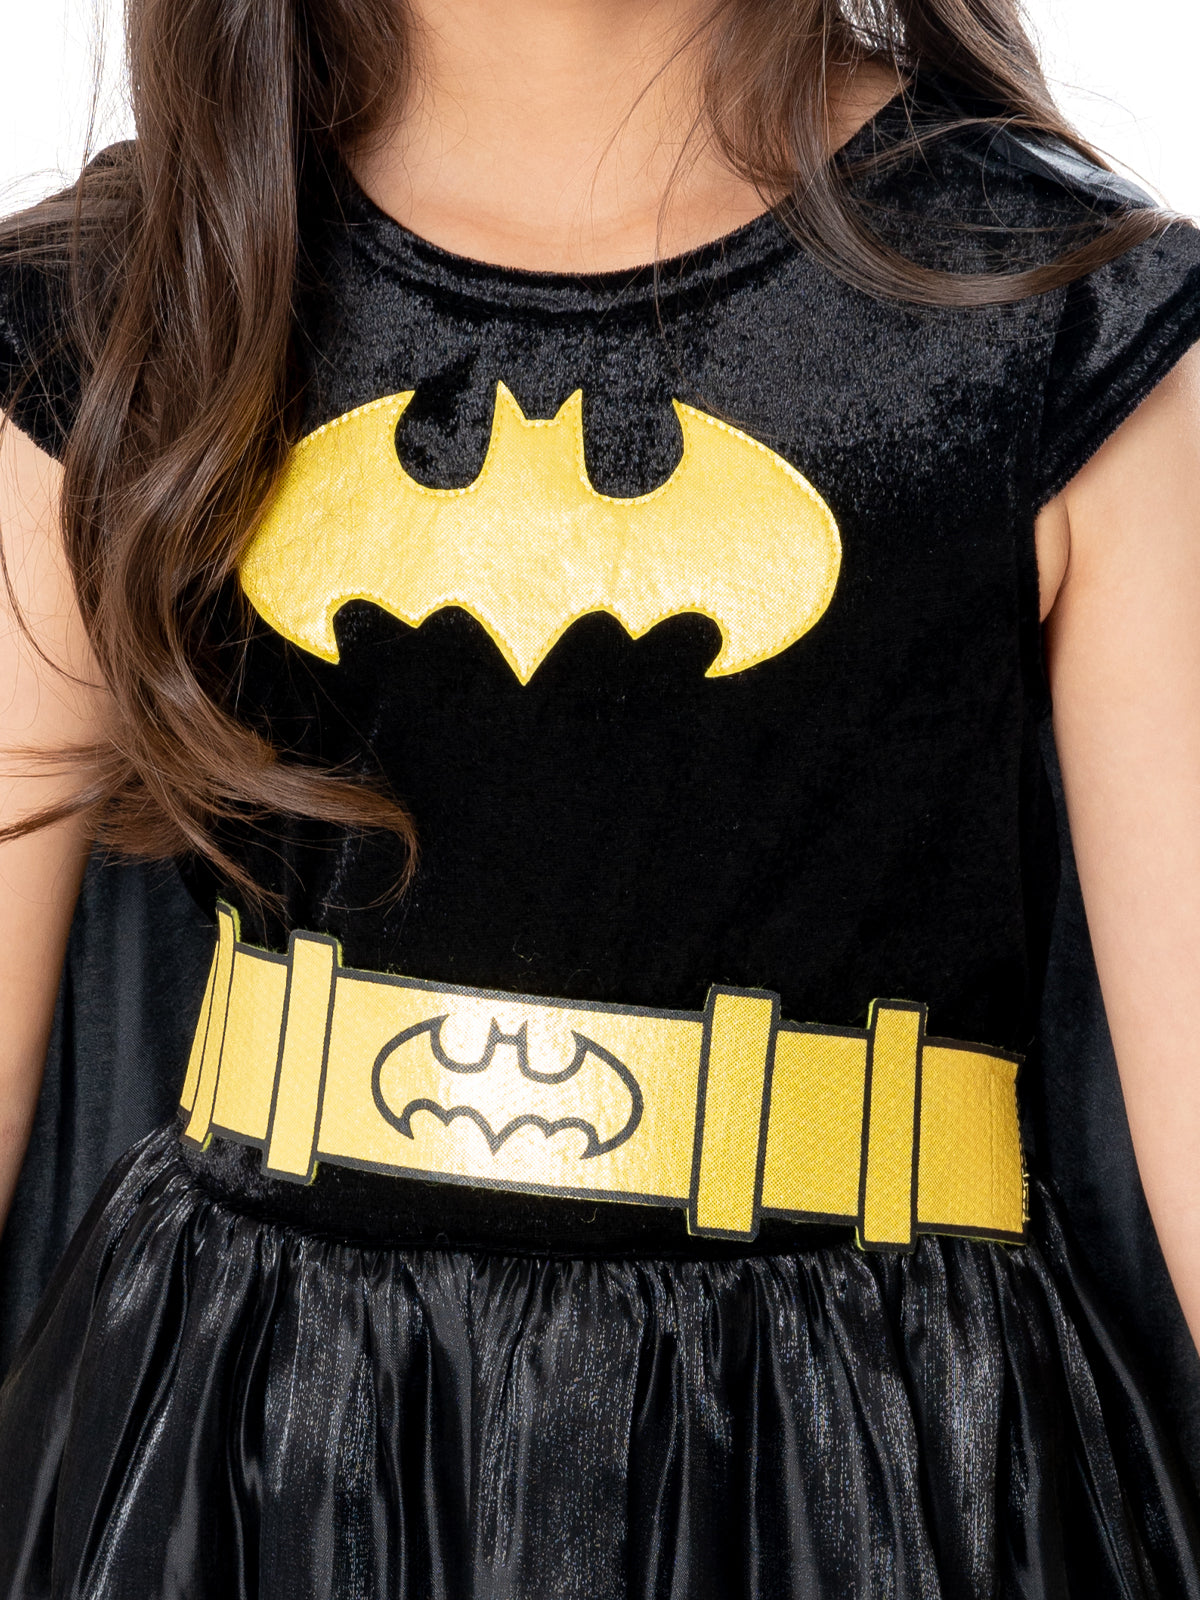 Rubie's DC Deluxe Batgirl Women's Fancy-Dress Costume for Adult, S 